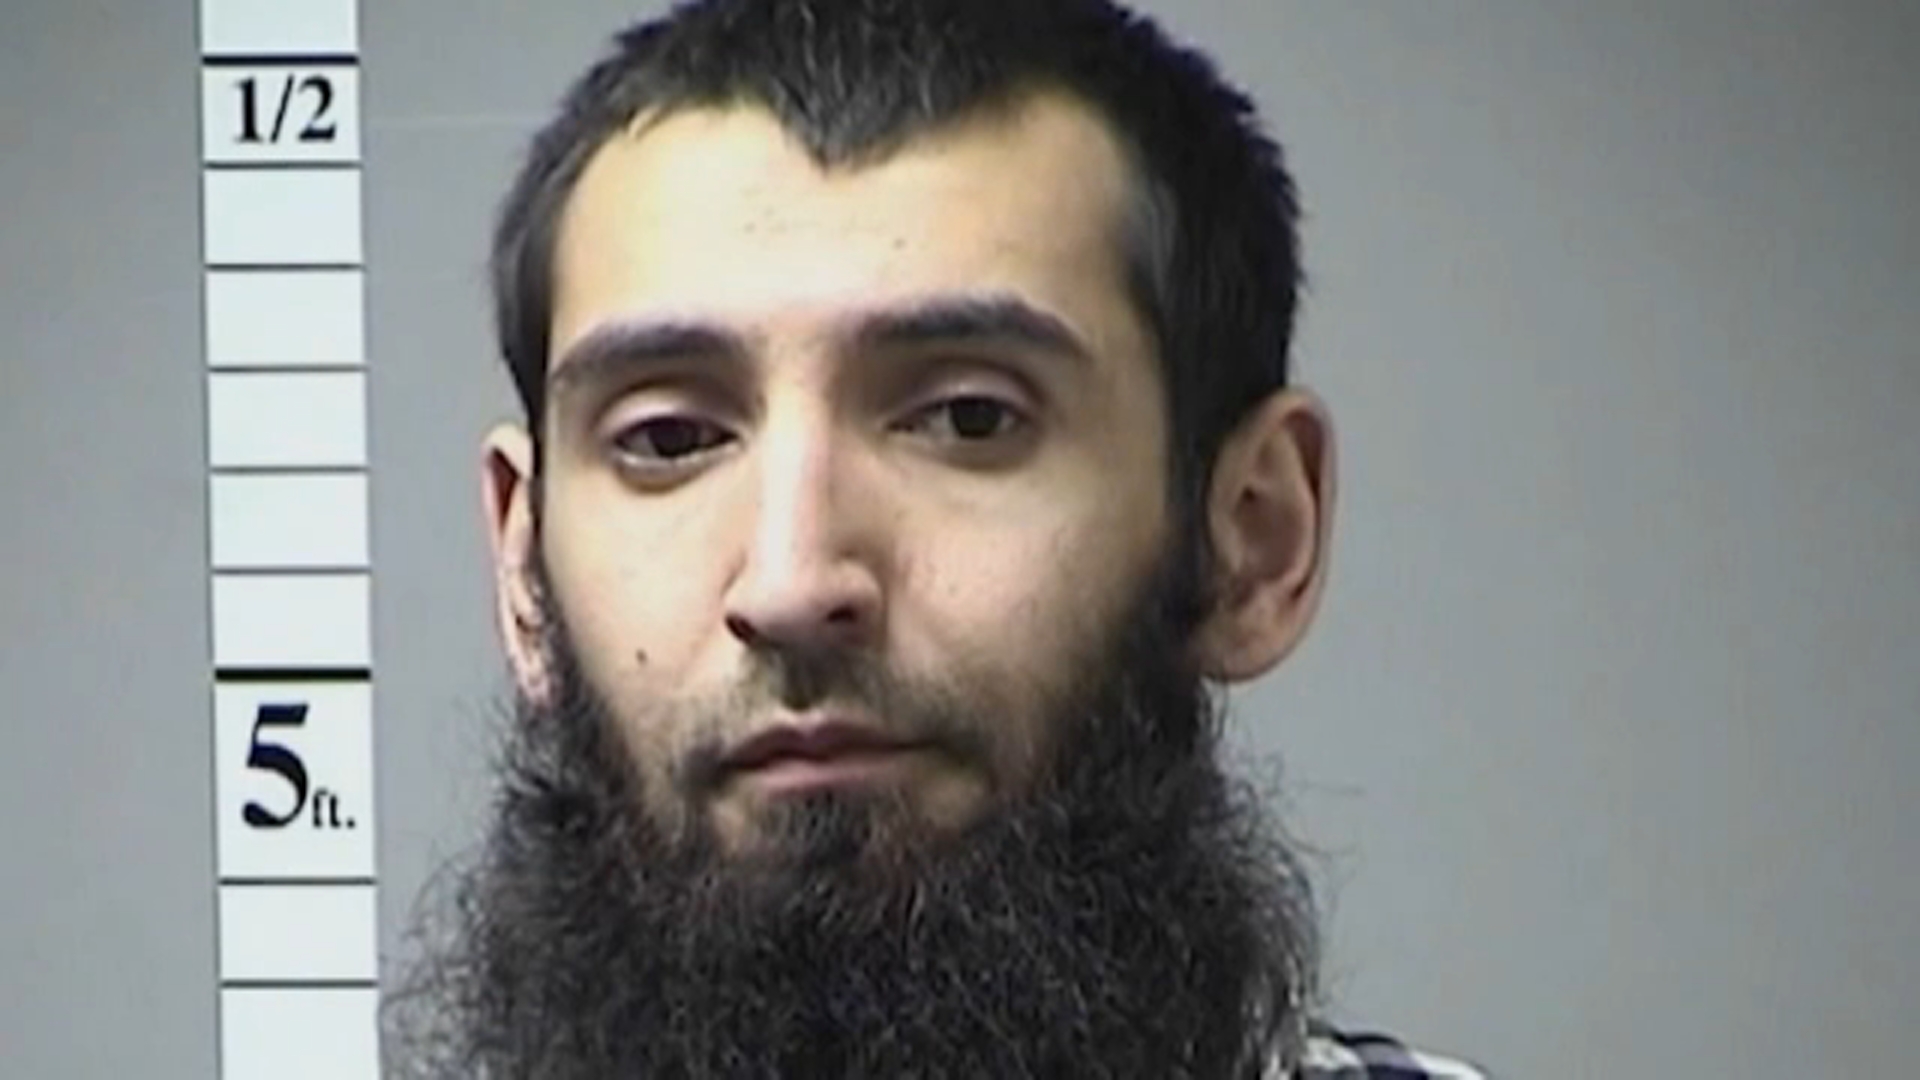 NYC truck terror attacker is ‘proud terrorist’ who deserves death